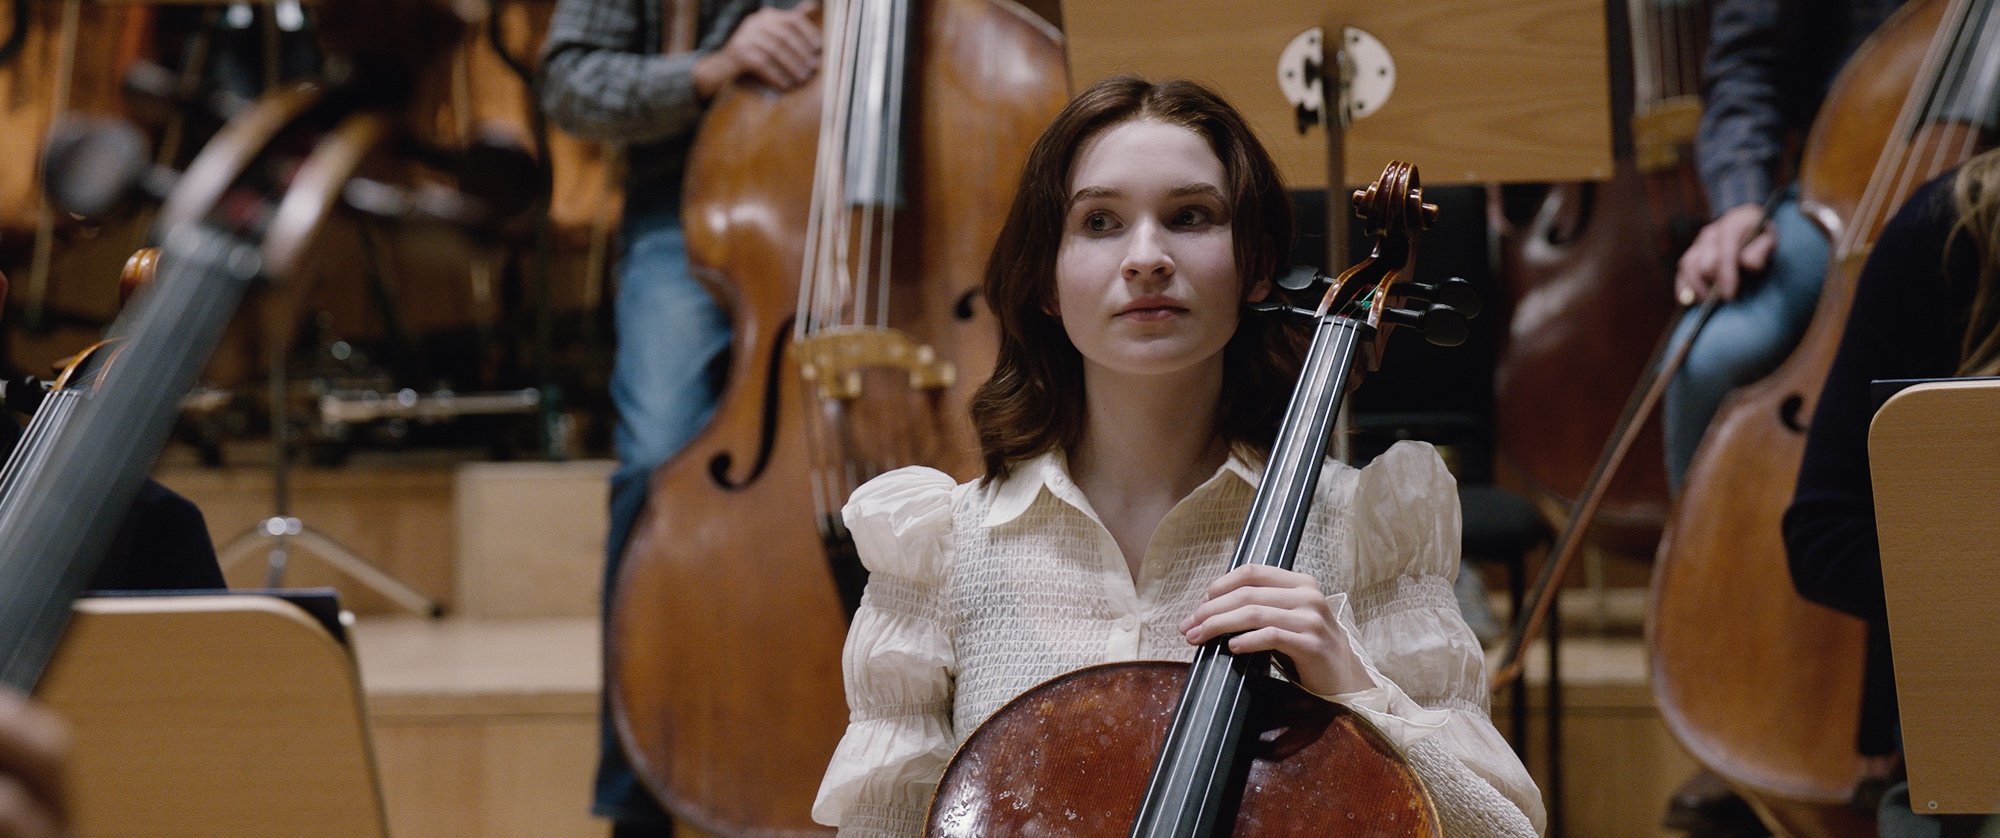 'TÁR' Sophie Kauer as Olga Metkina looking uncertain, holding her cello